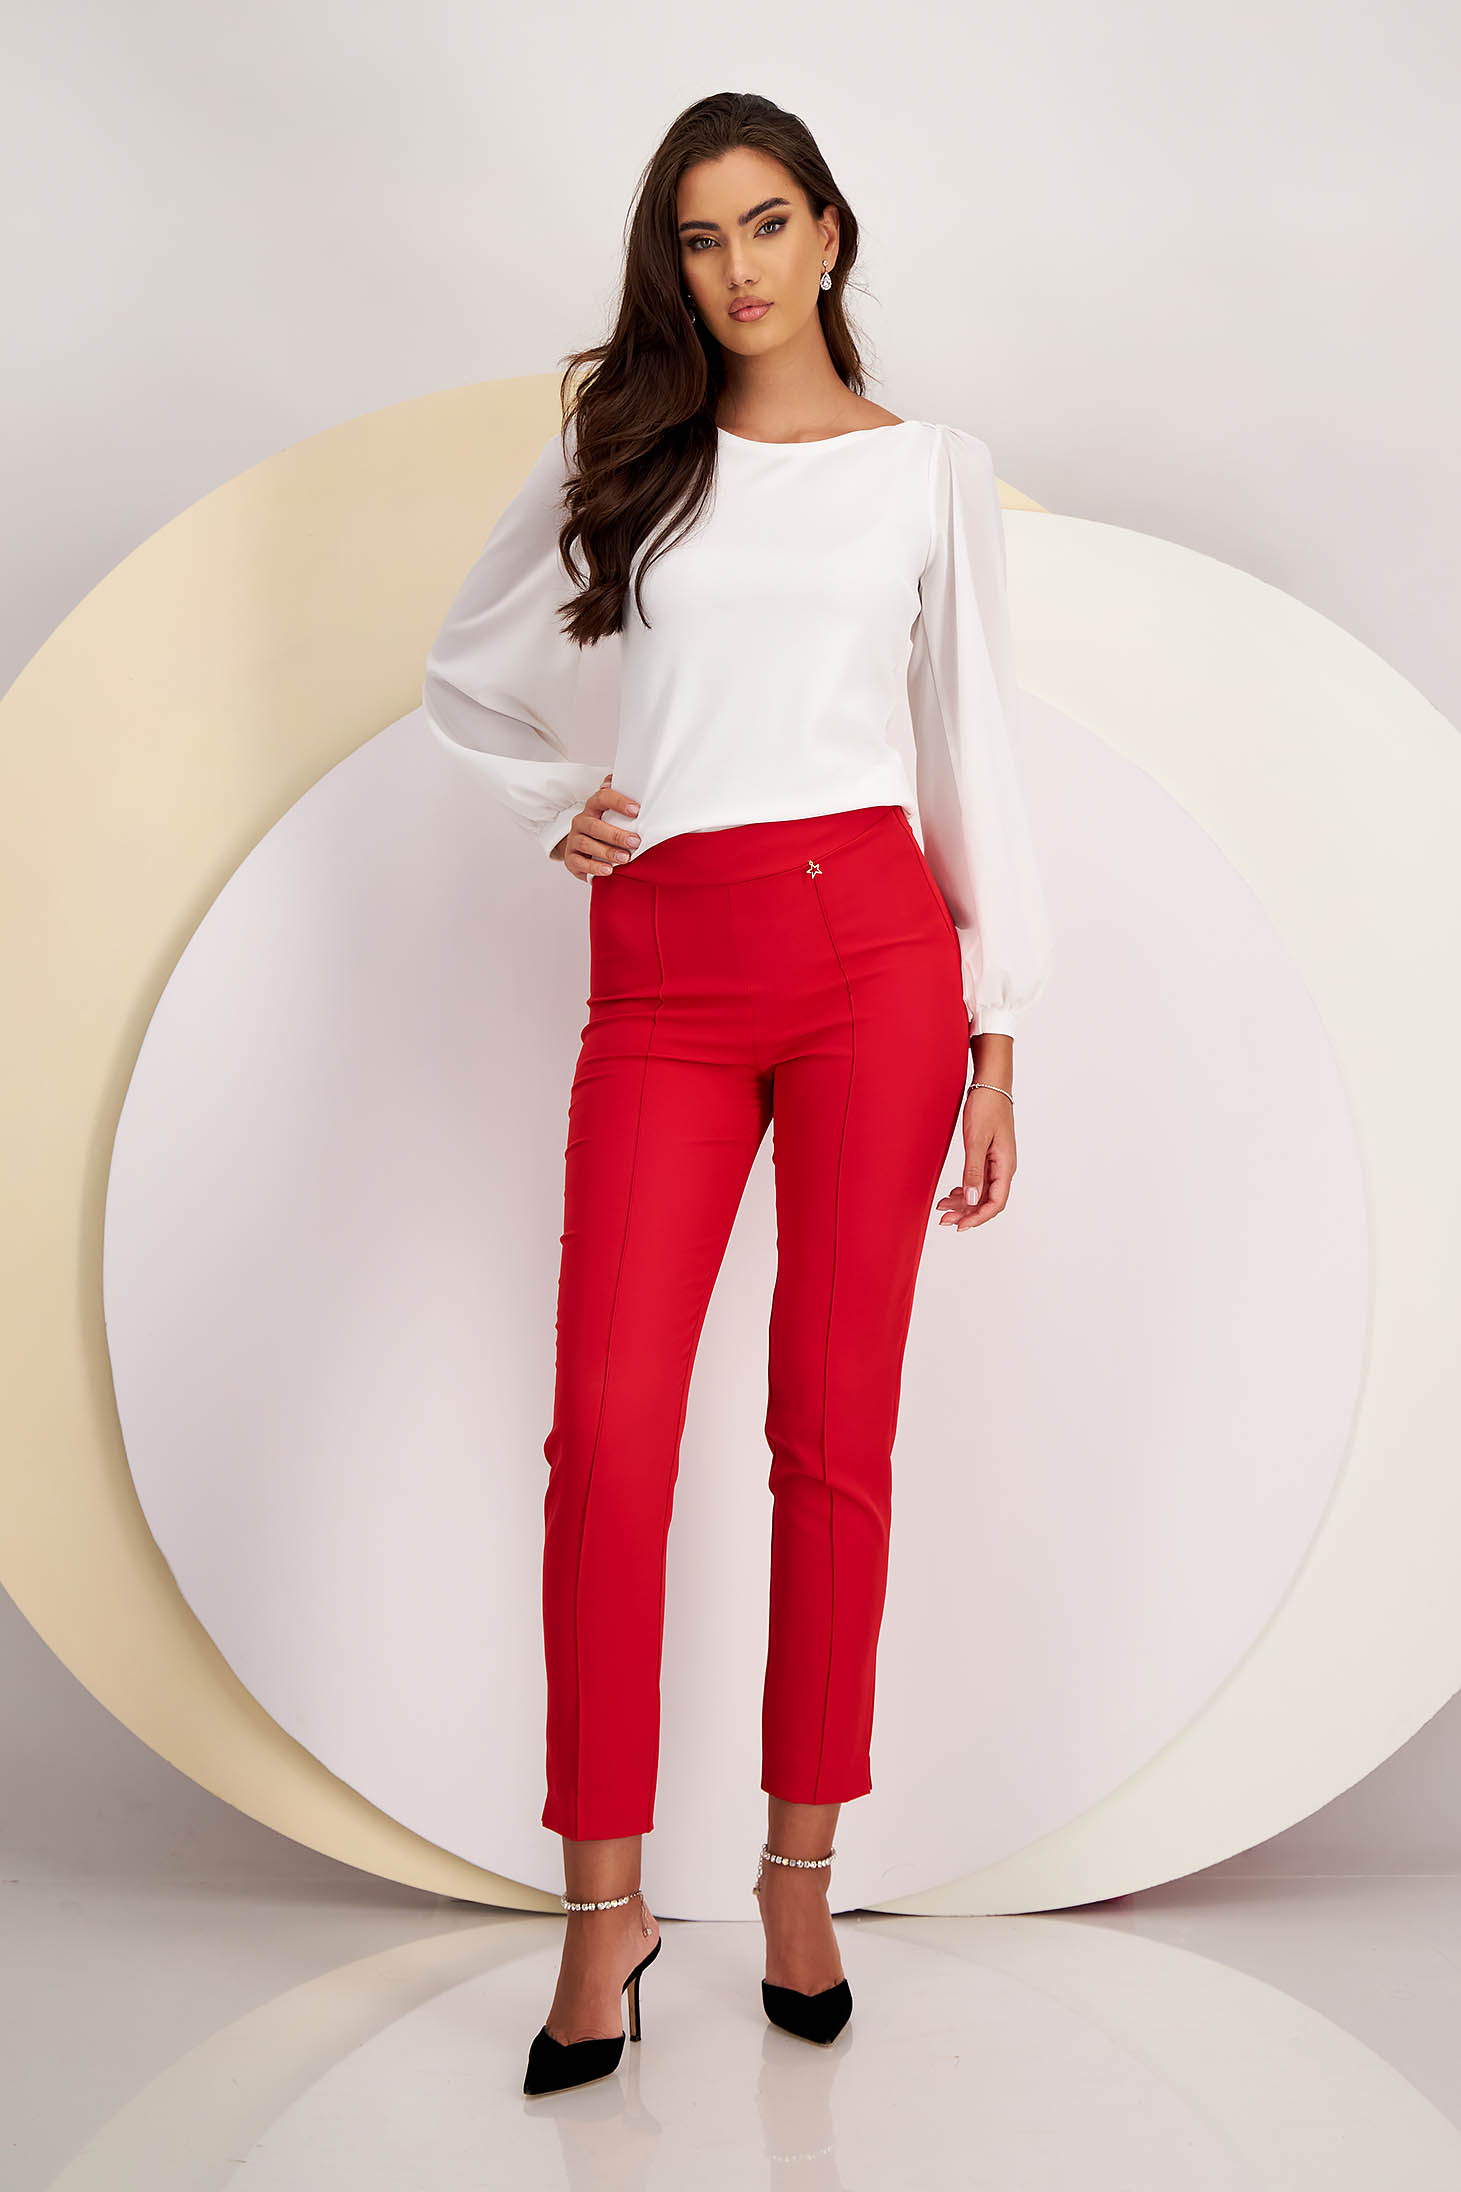 Pantaloni din stofa usor elastica rosii conici cu talie inalta - StarShinerS 6 - StarShinerS.ro